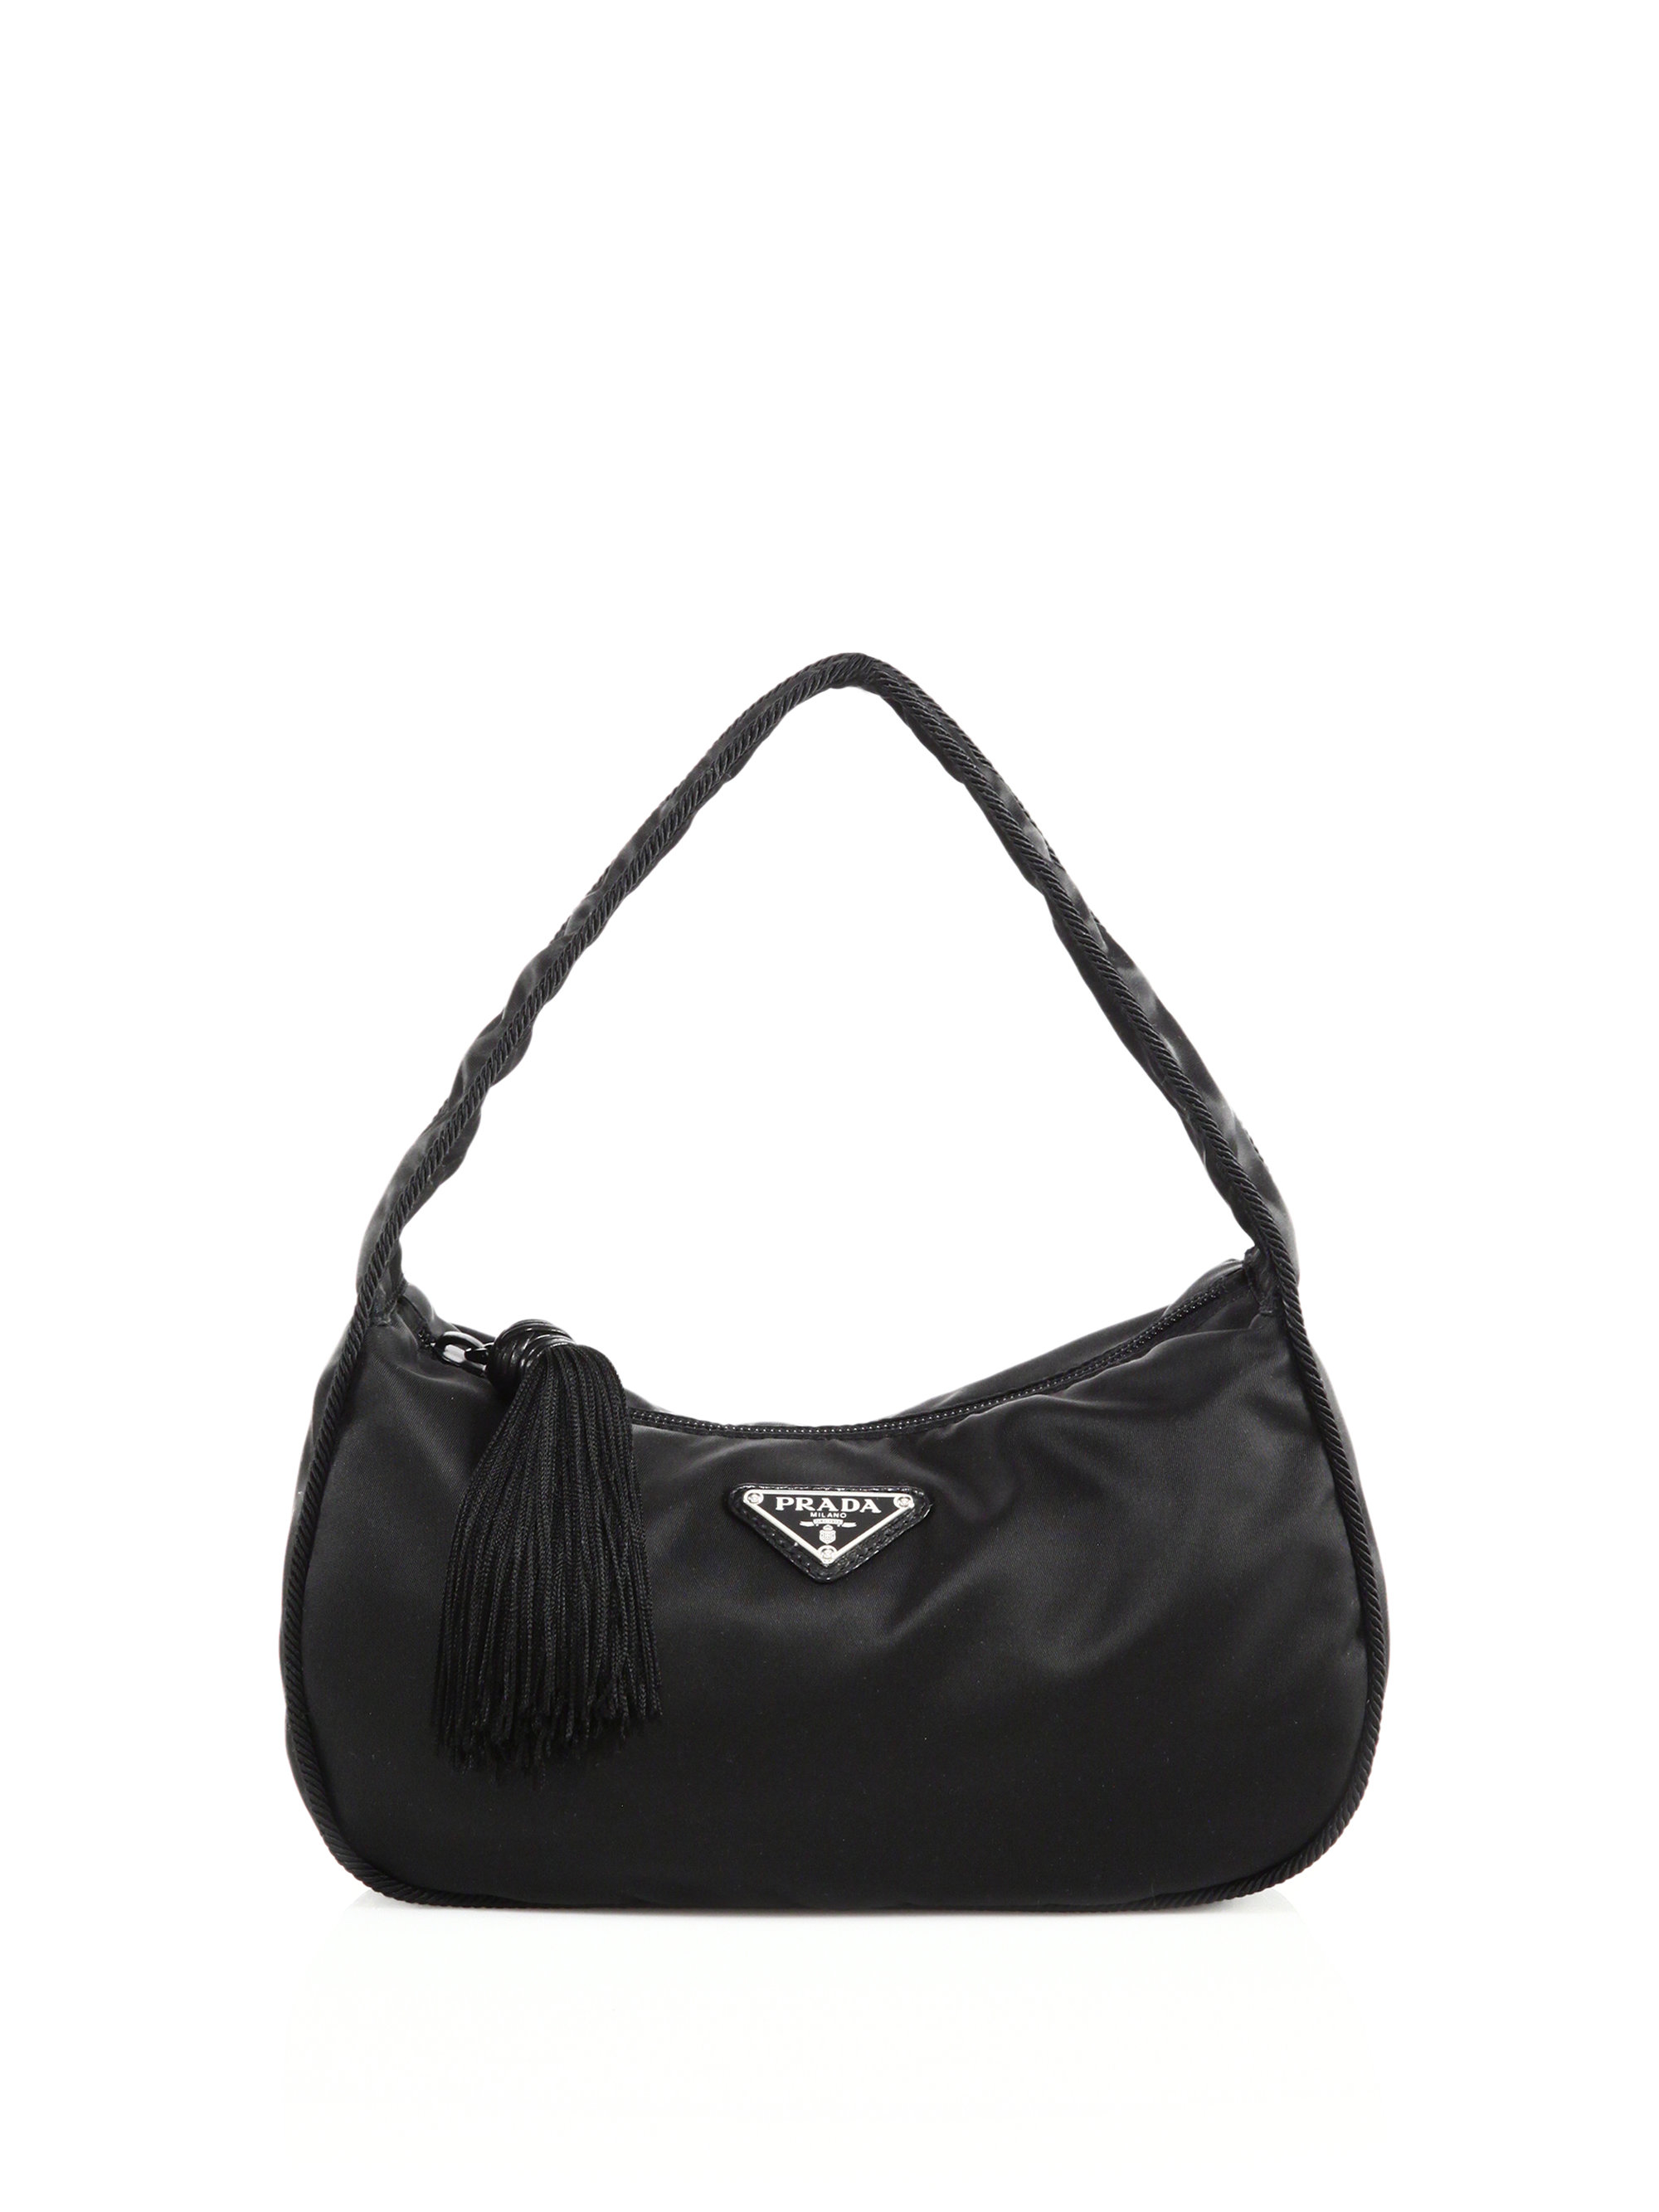 Lyst - Prada Nylon Crescent Shoulder Bag in Black